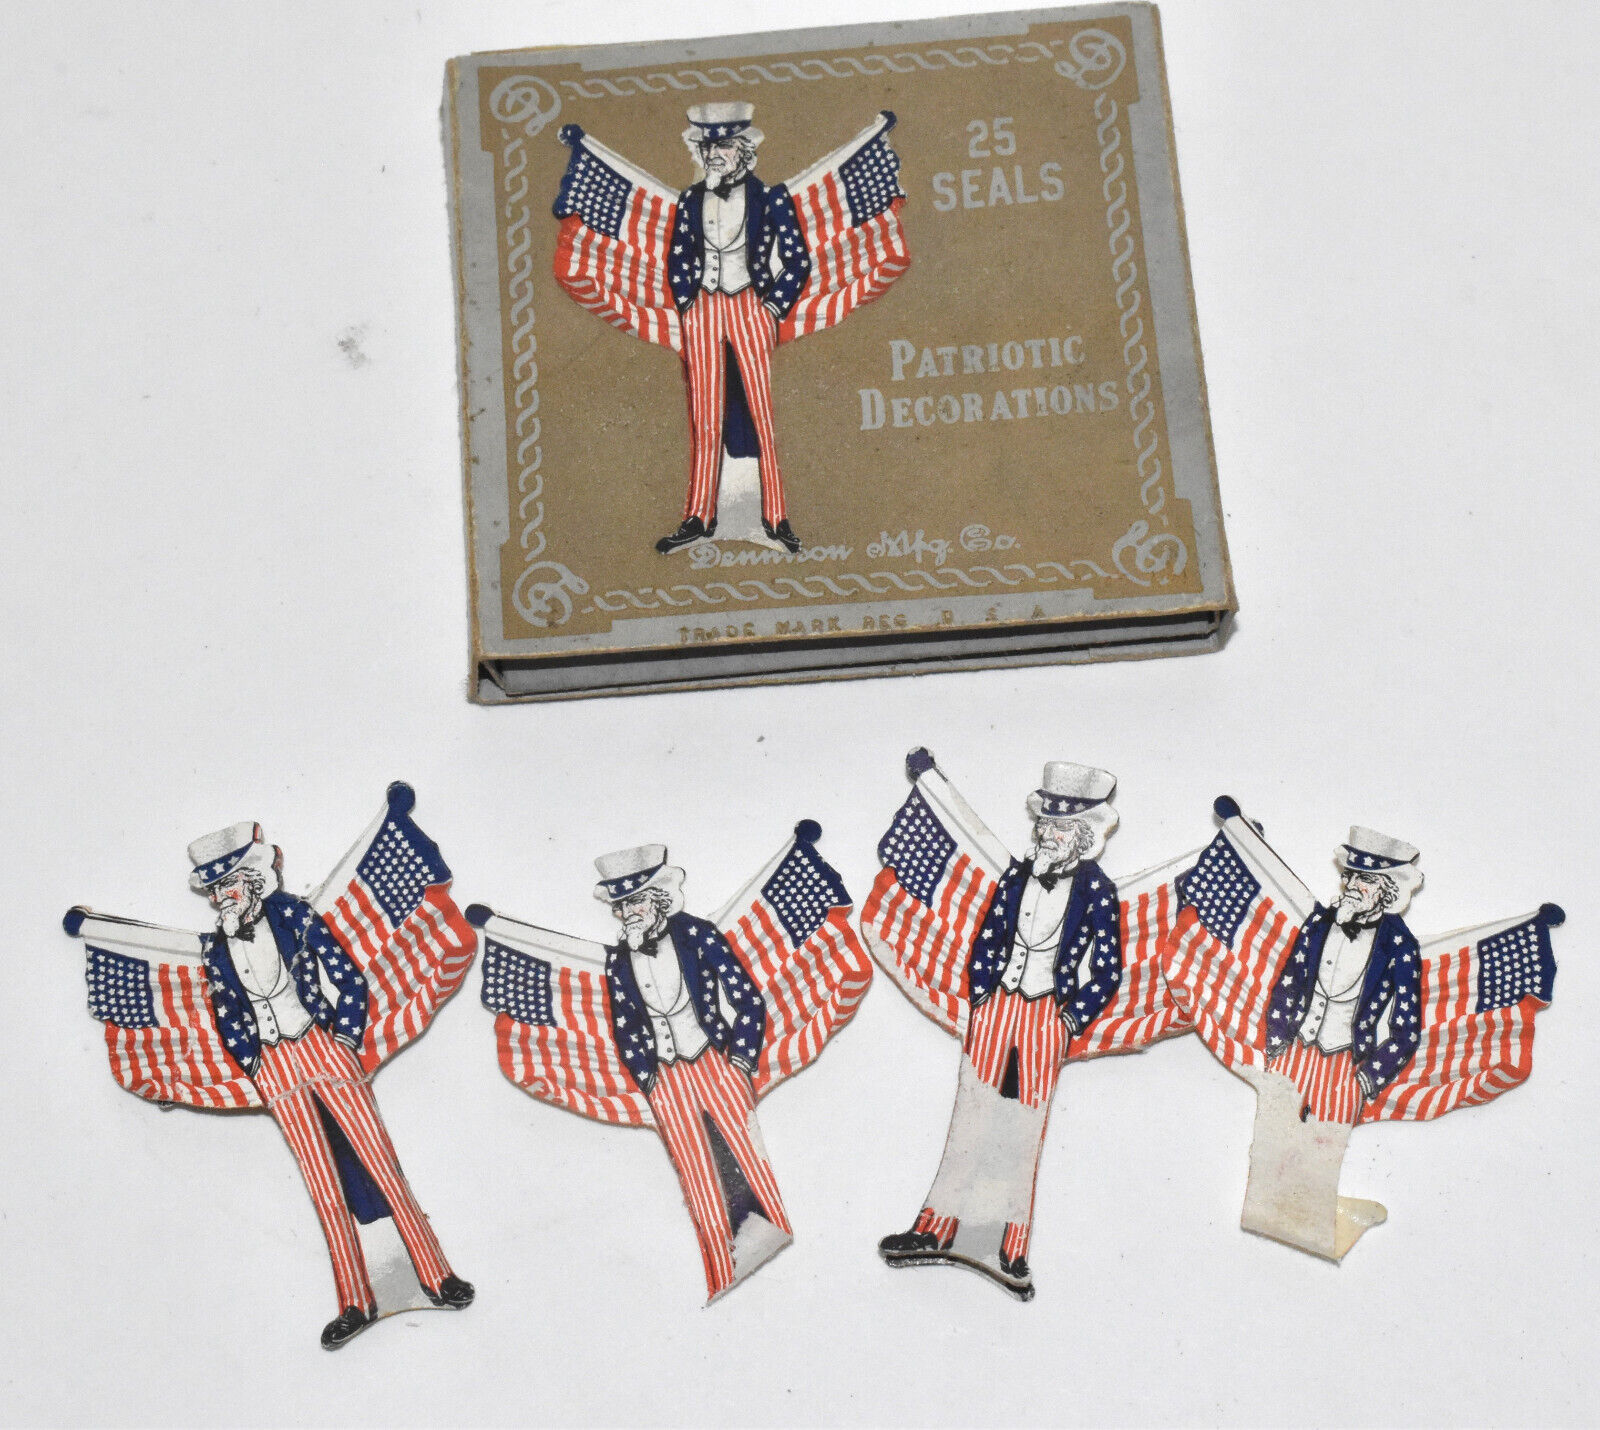 RARE Antique Dennison Patriotic Decoration Seals Uncle Sam Flags Die Cut in Box